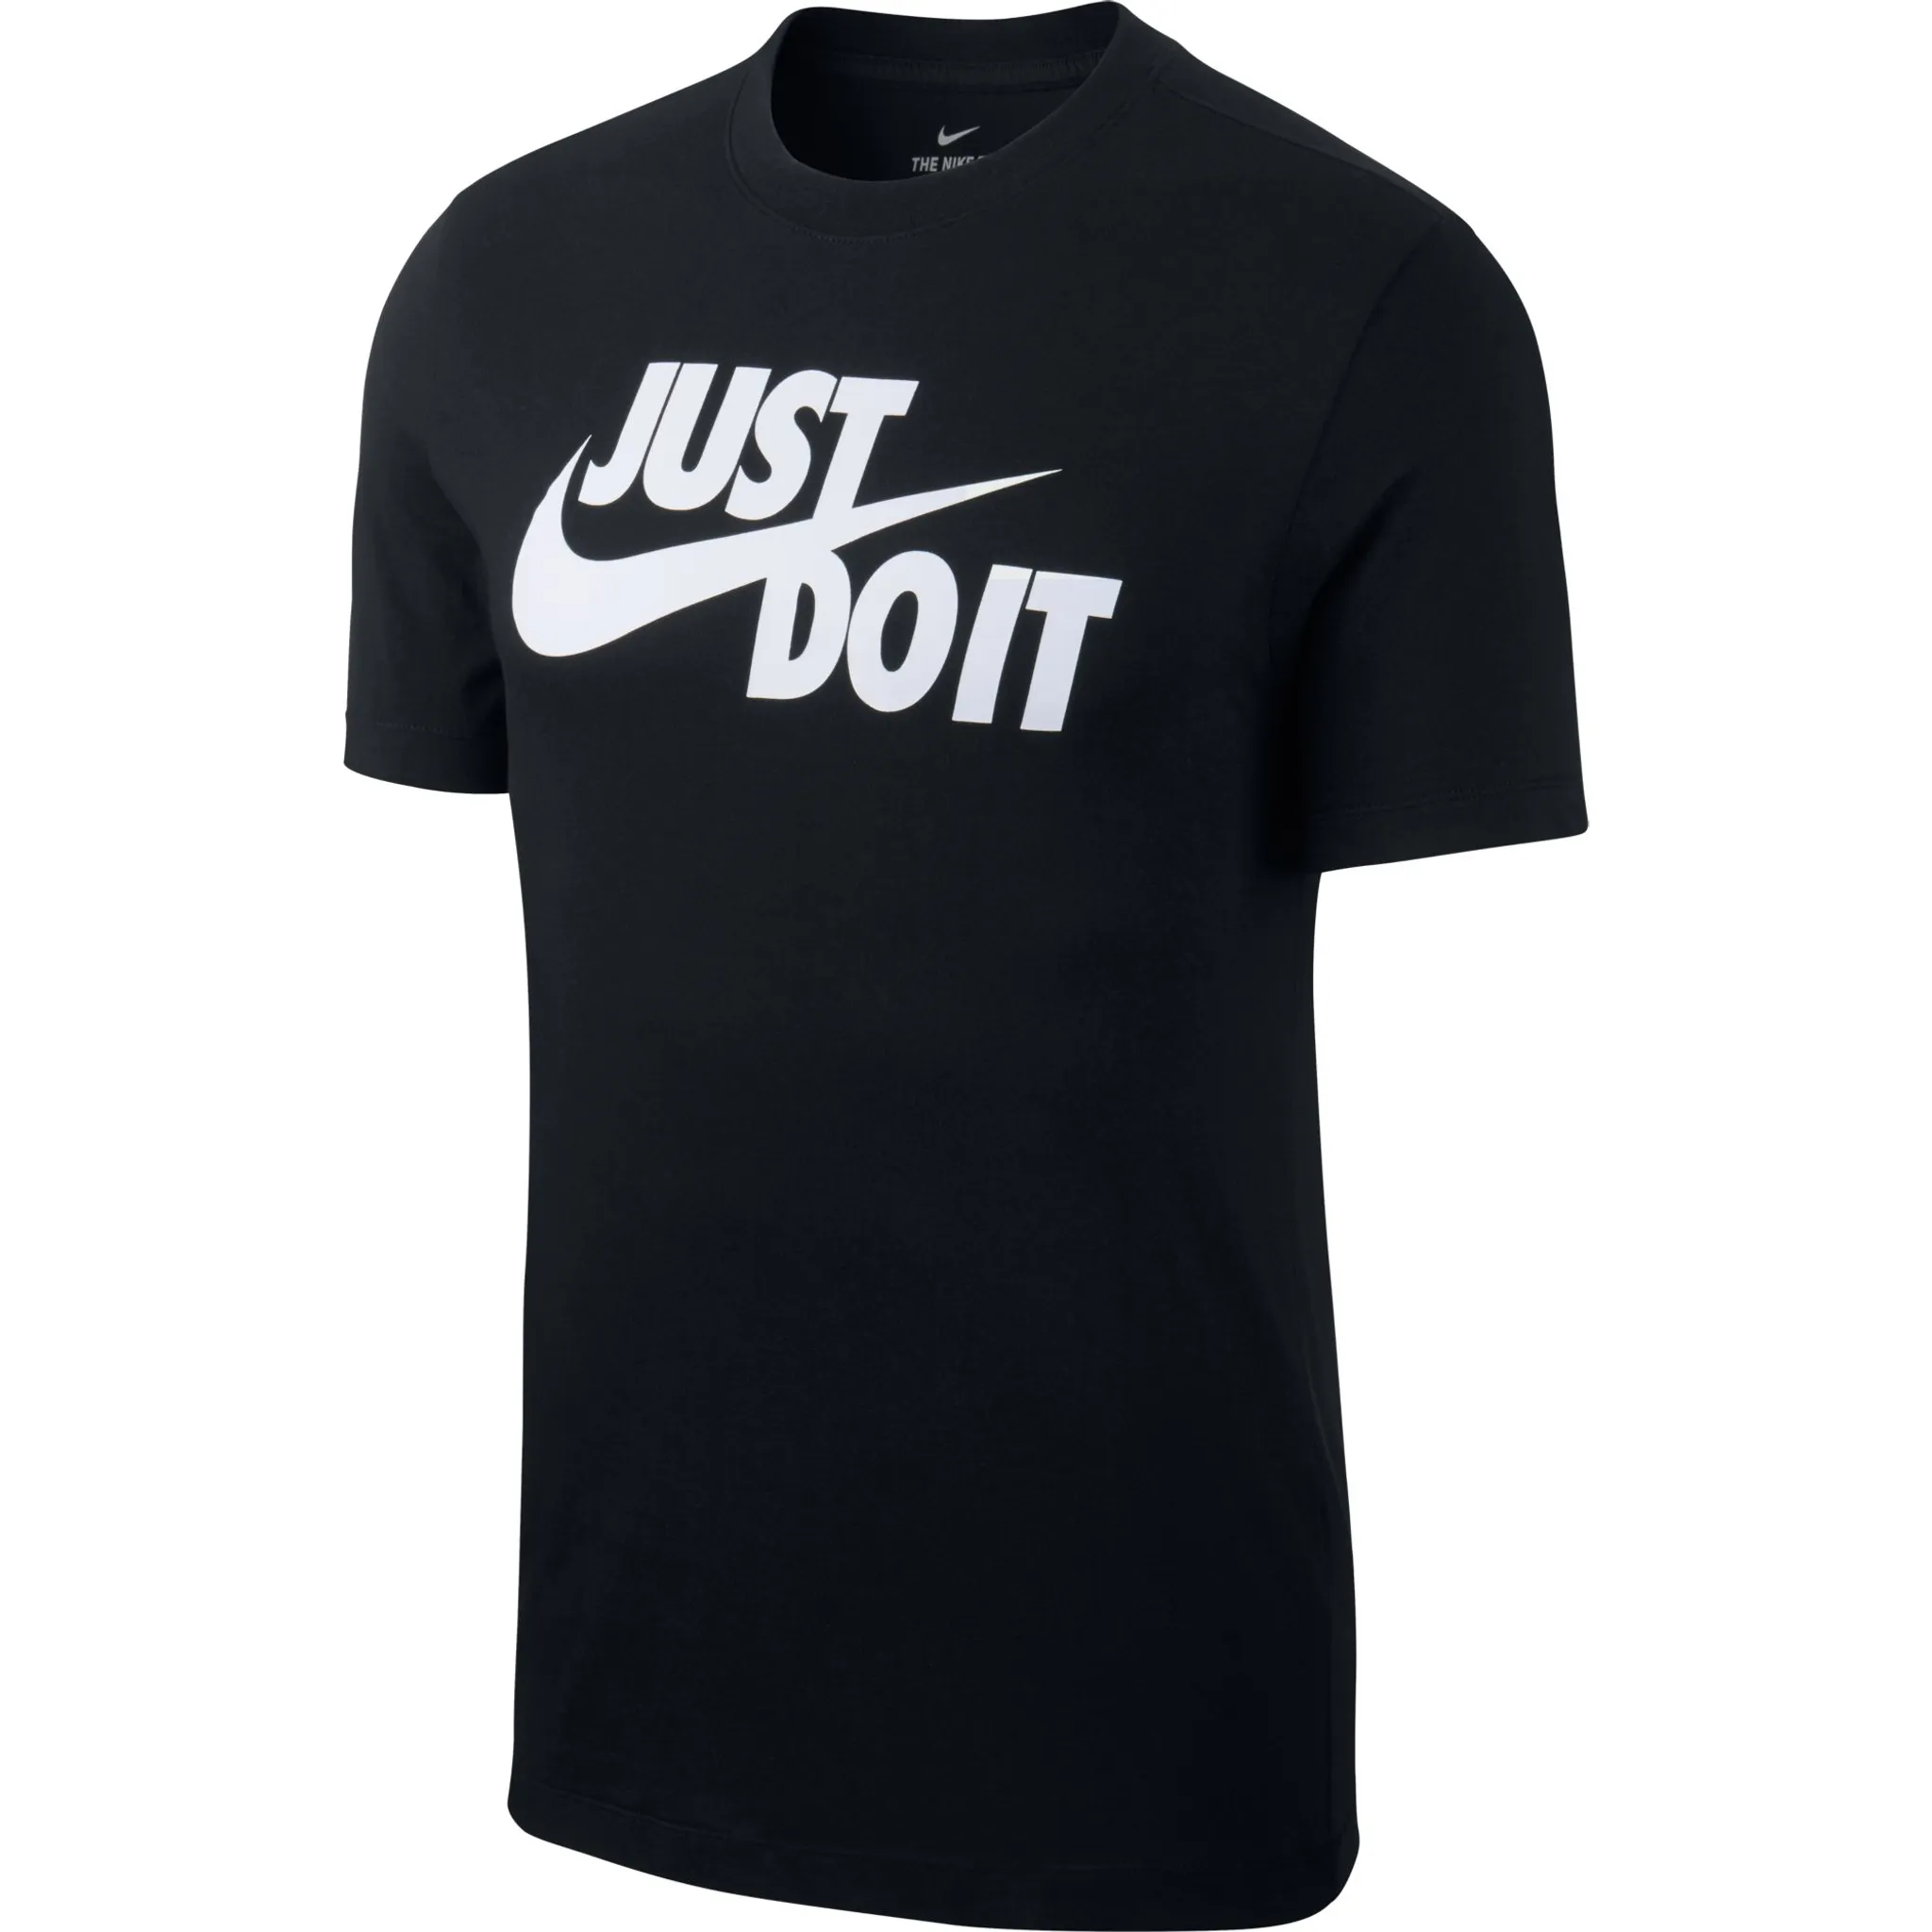 Nike Sport-Freizeit-Fitness-T-Shirt | Kaufland.de